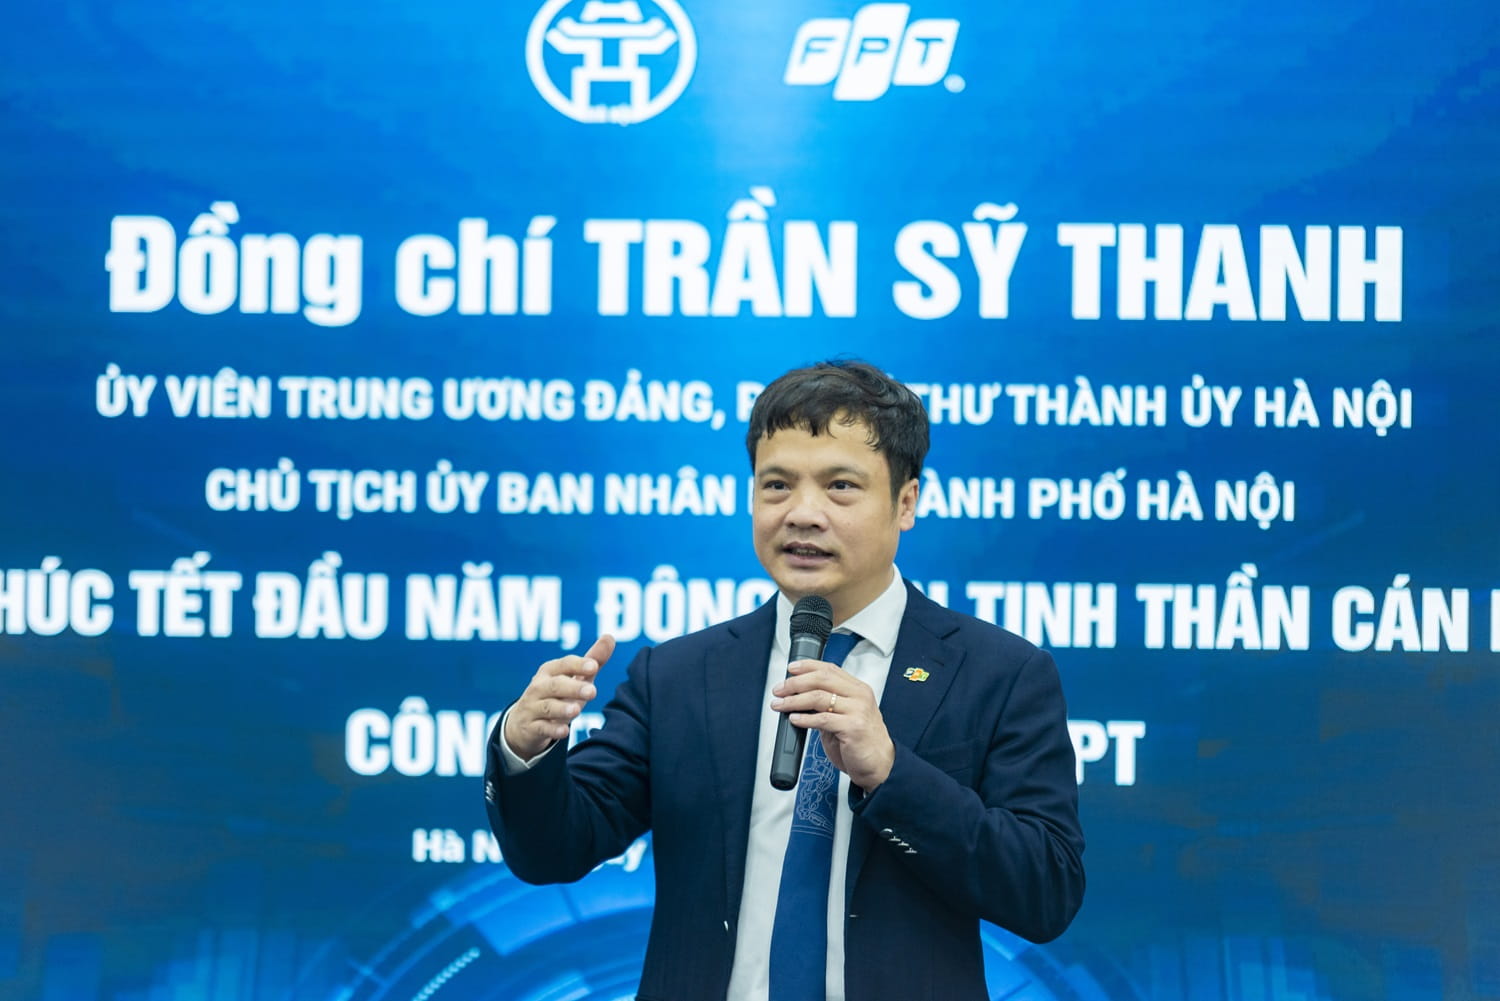 Mr. Nguyen Van Khoa, CEO of FPT, met with the Chairman of the Hanoi People's Committee.